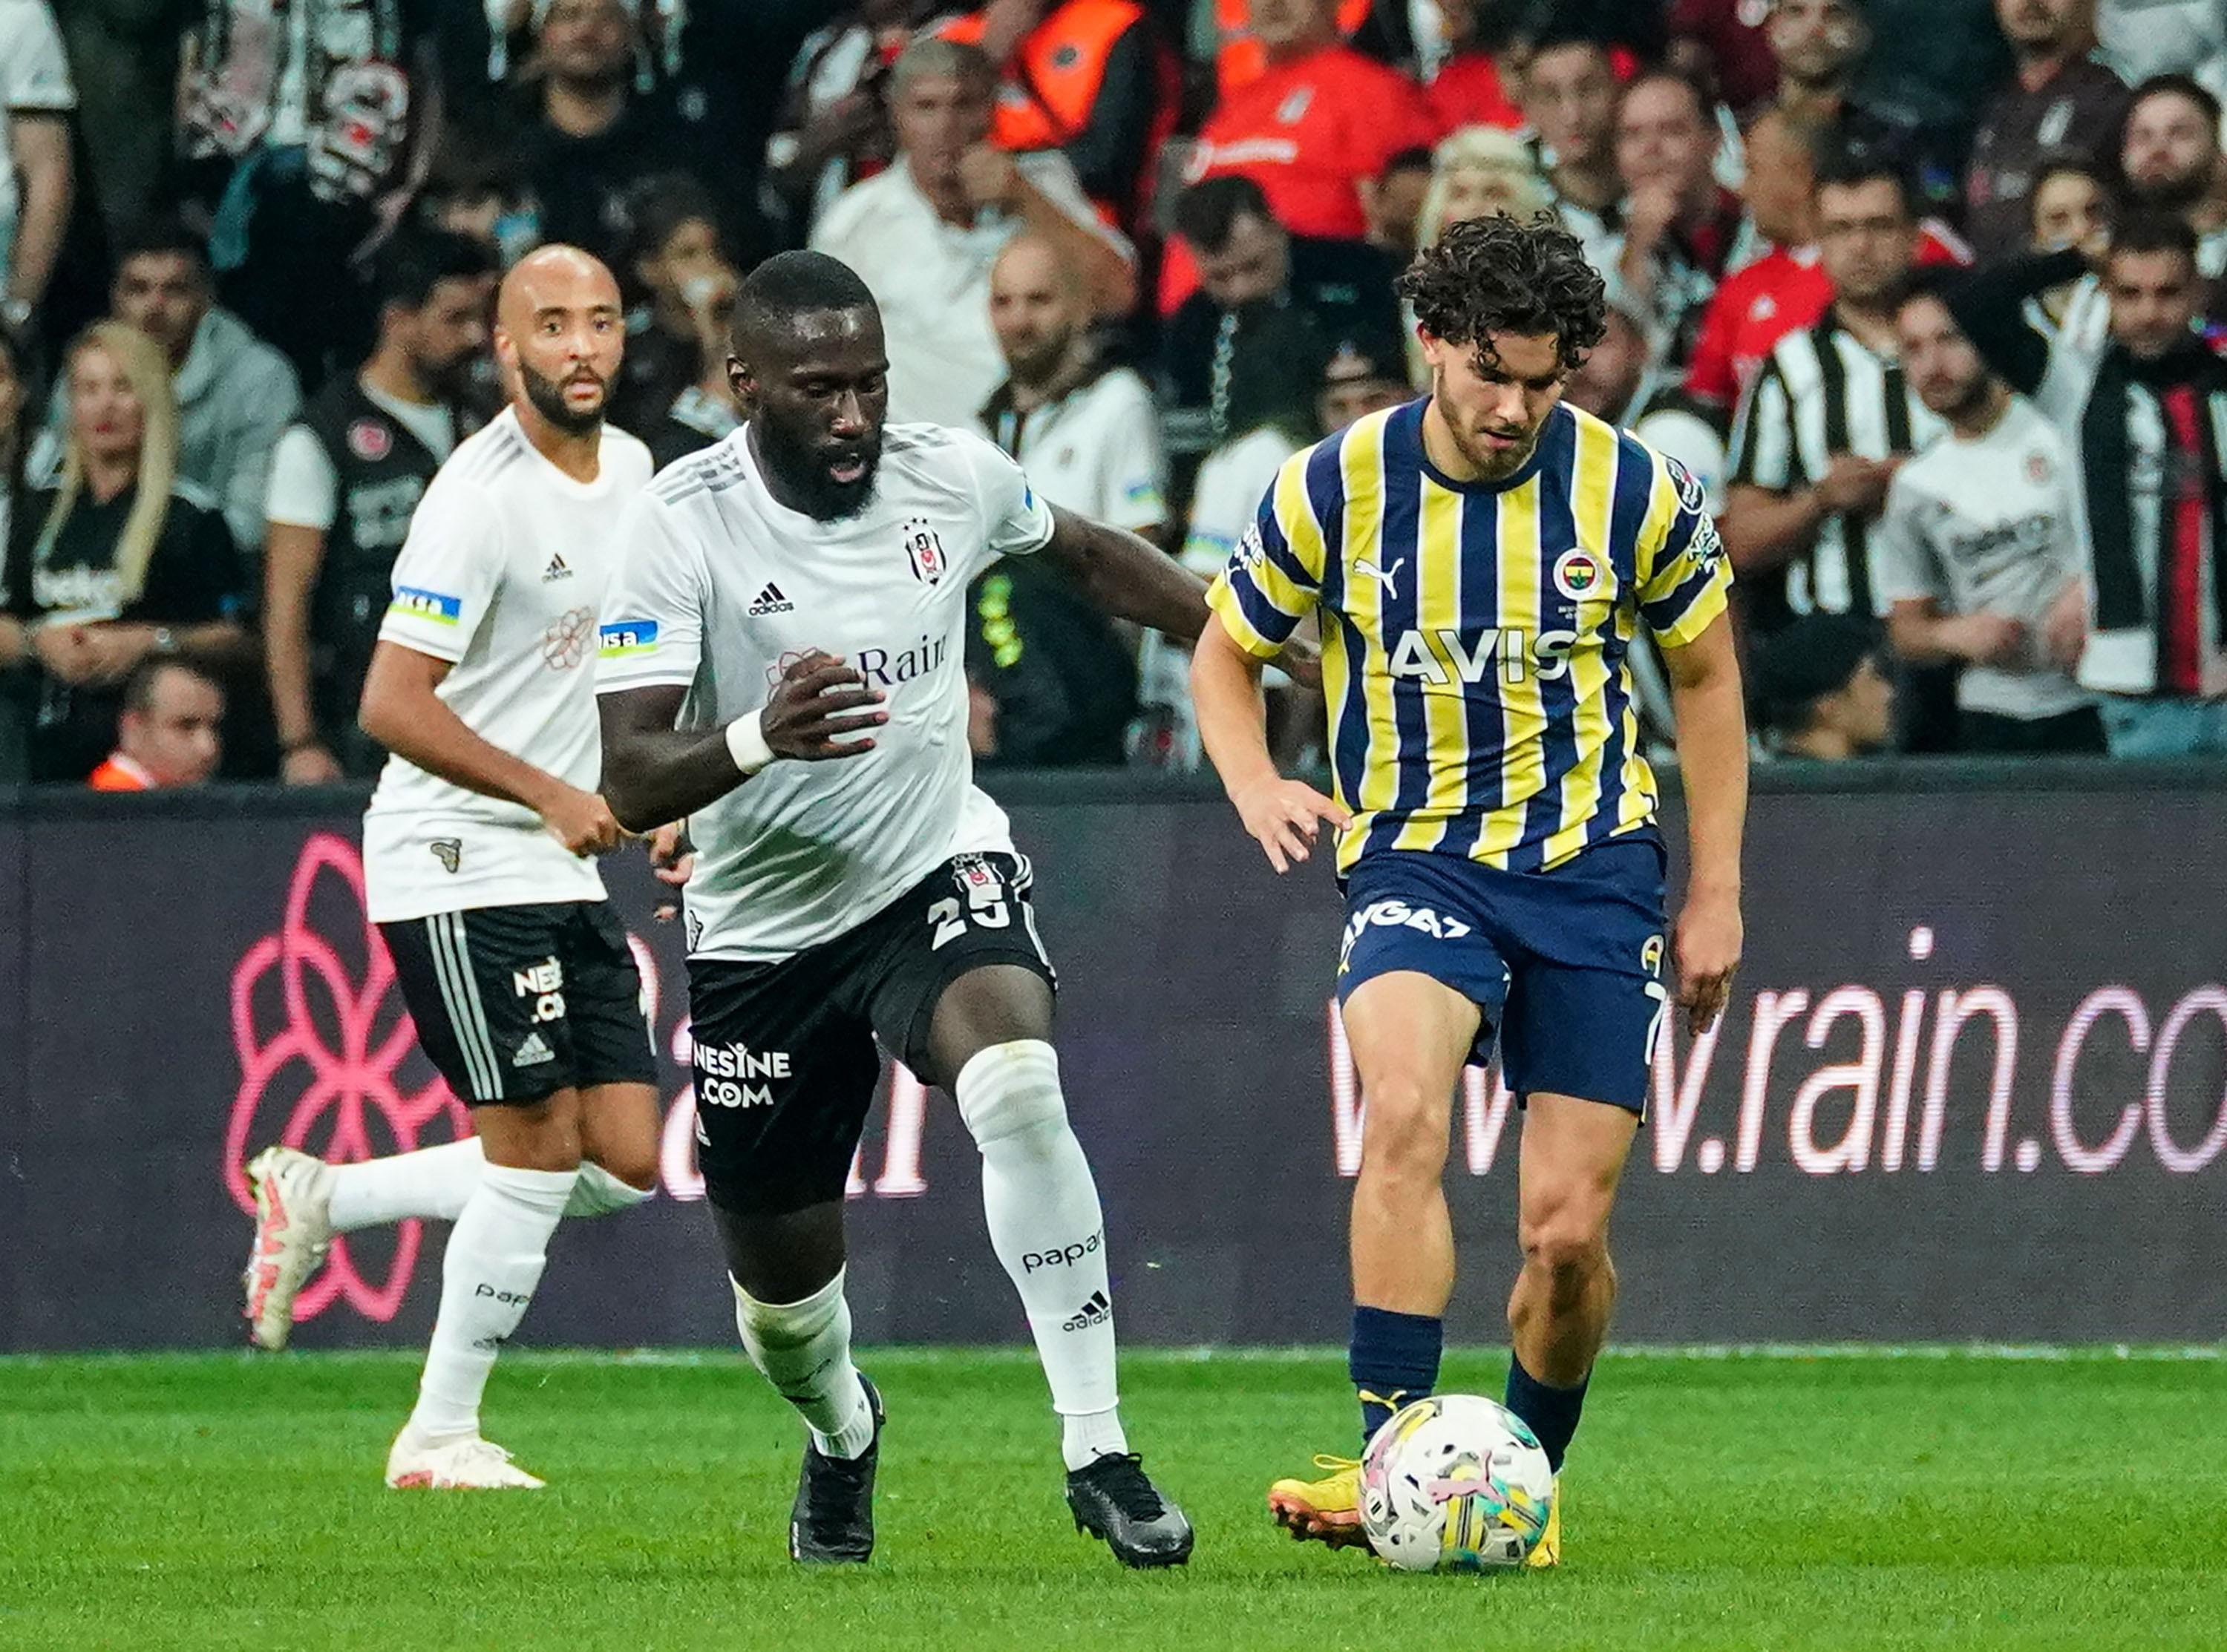 (ÖZET) Beşiktaş - Fenerbahçe maç sonucu: 0-0